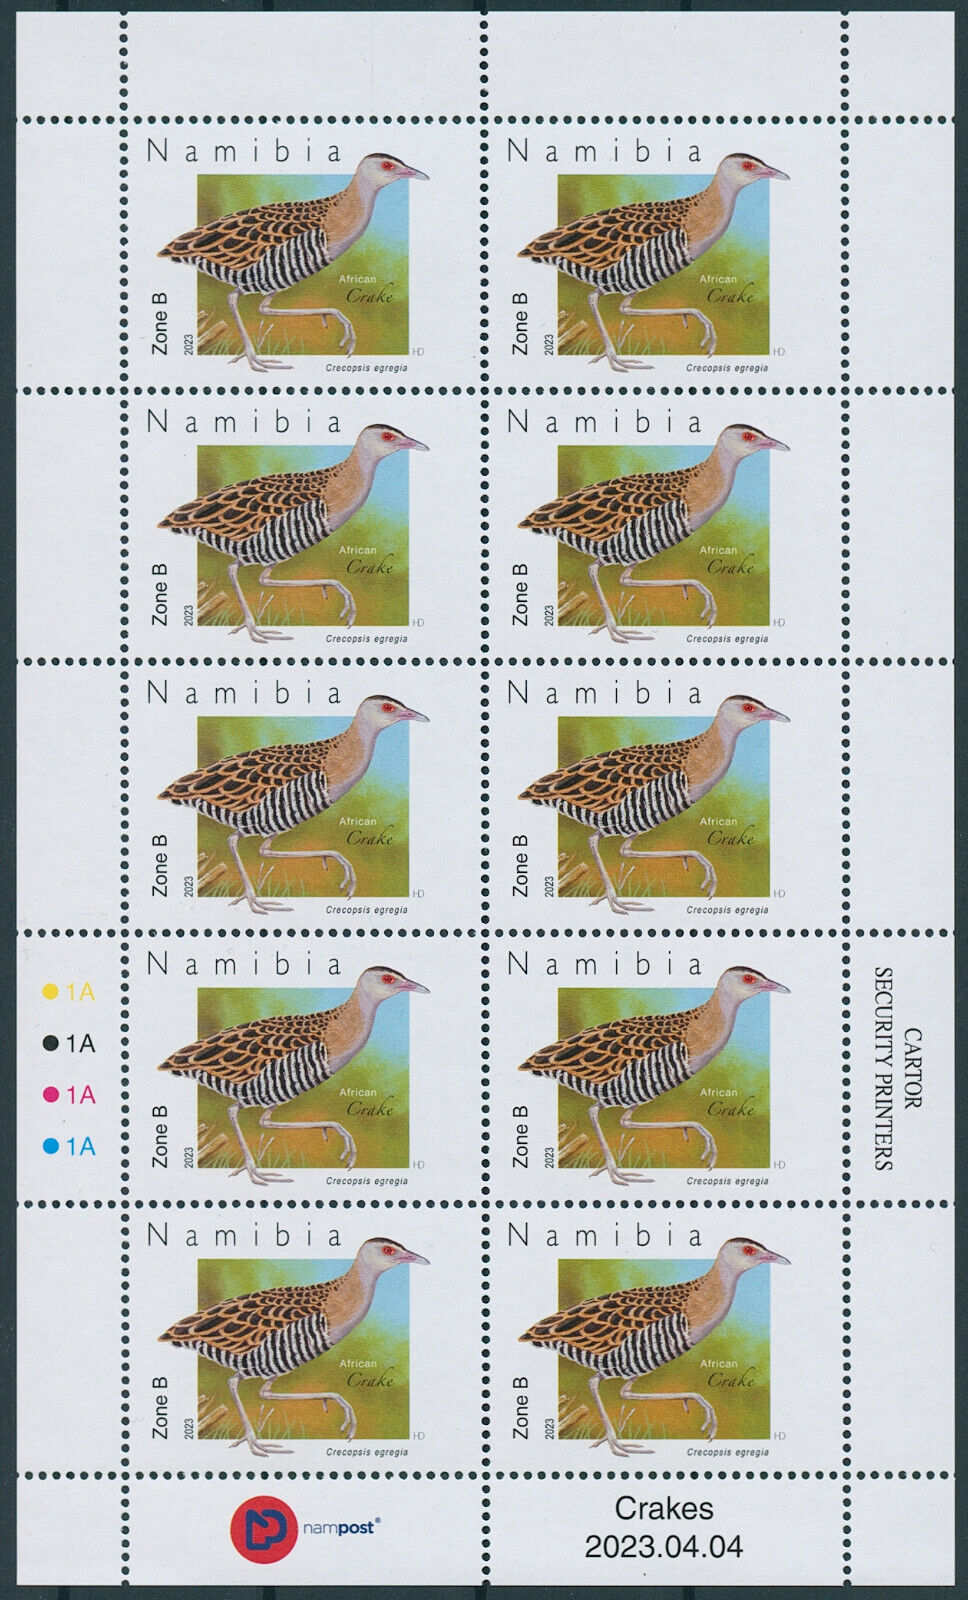 Namibia 2023 MNH Birds on Stamps Crakes Black African Crake 3x 10v Full Sheets